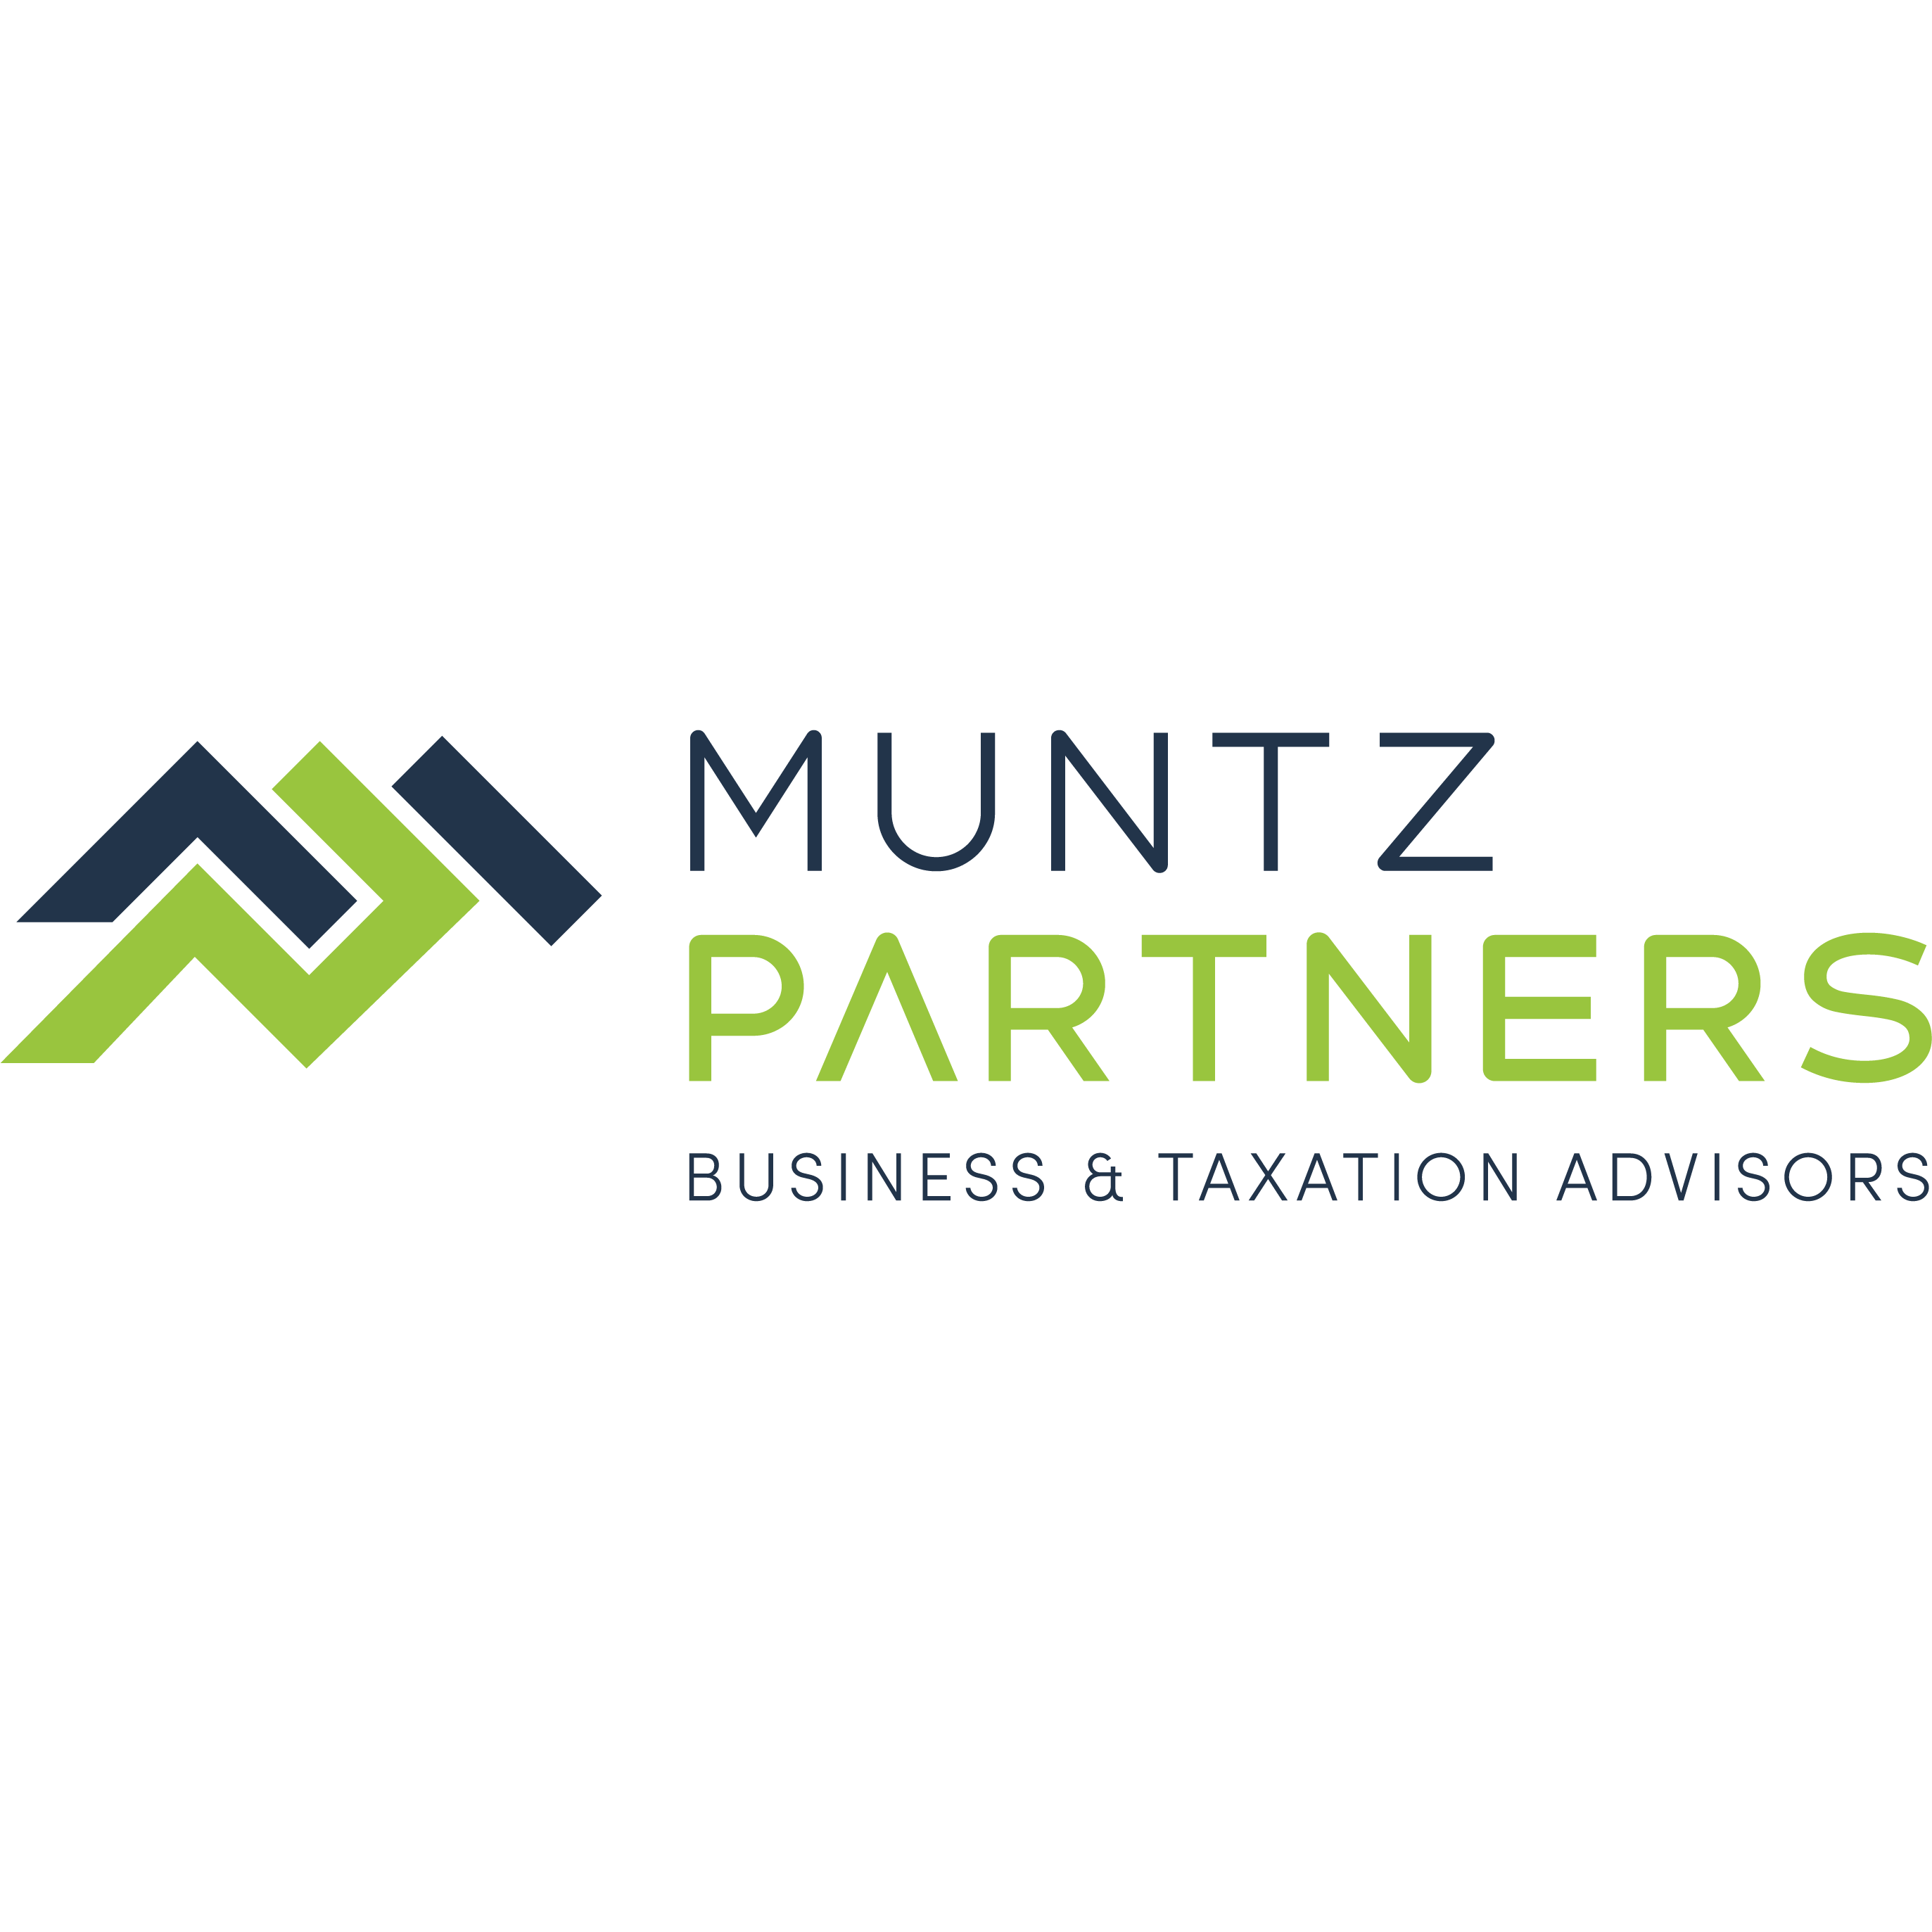 Muntz Partners Business & Taxation Advisors Toodyay (08) 9574 2776